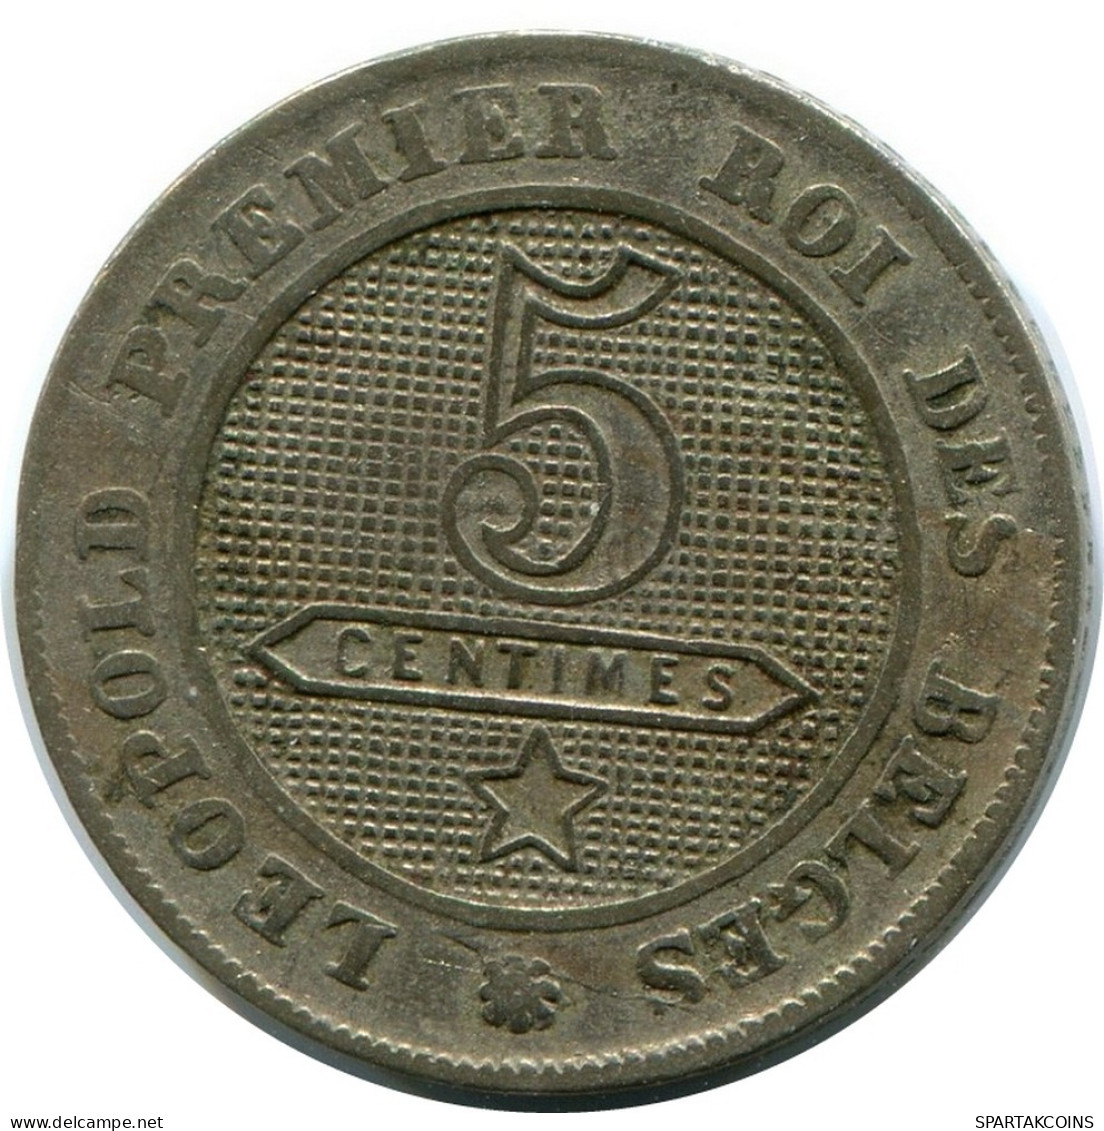 5 CENTIMES 1862 BELGIUM Coin #AX362.U - 5 Cent